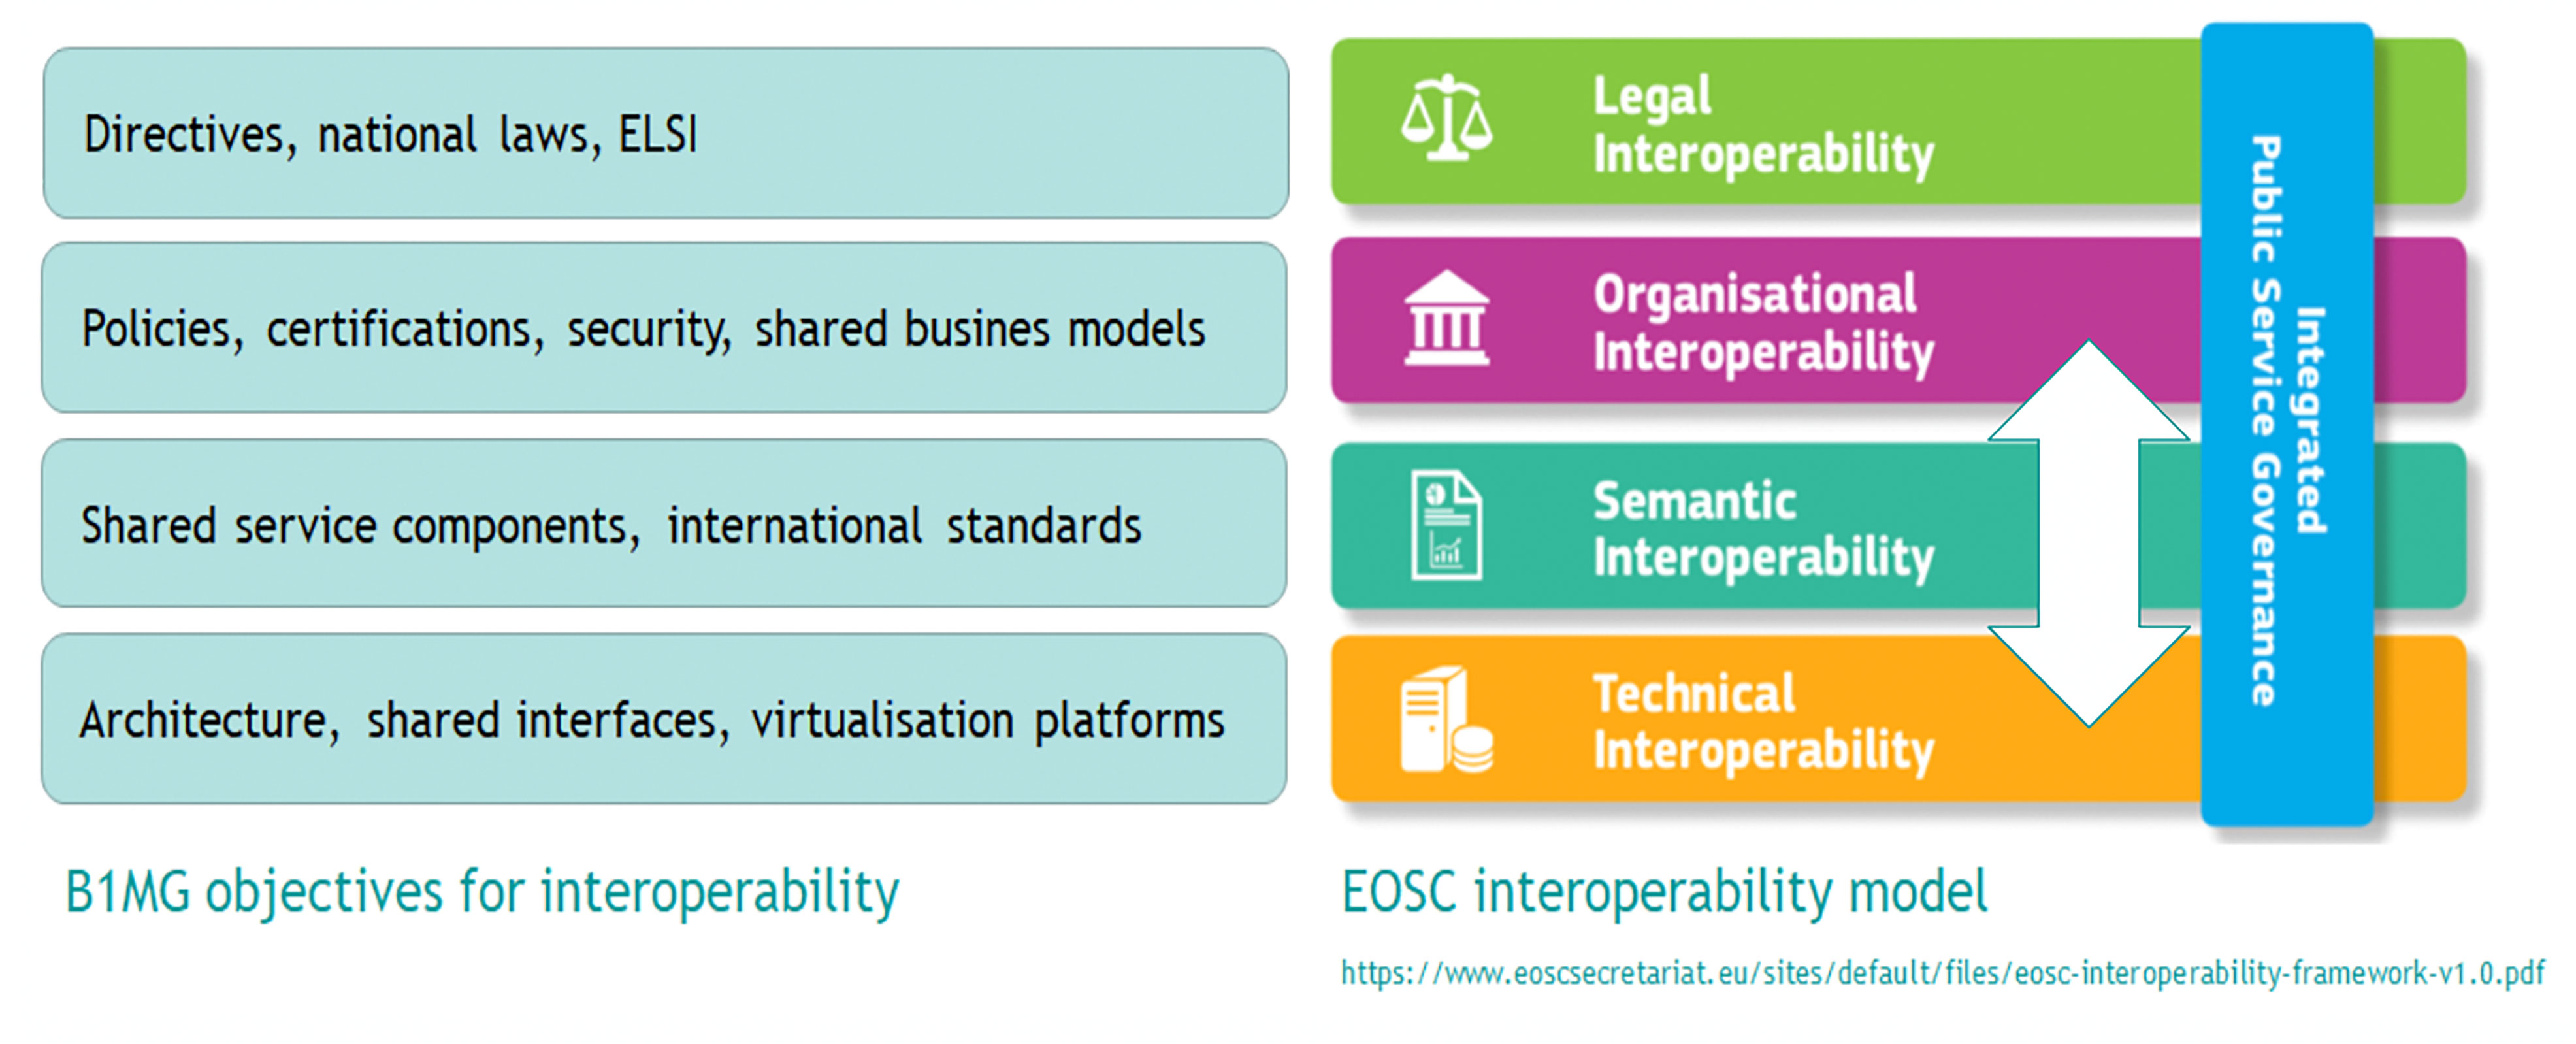 B1MG objectives for interoperability EOSC model